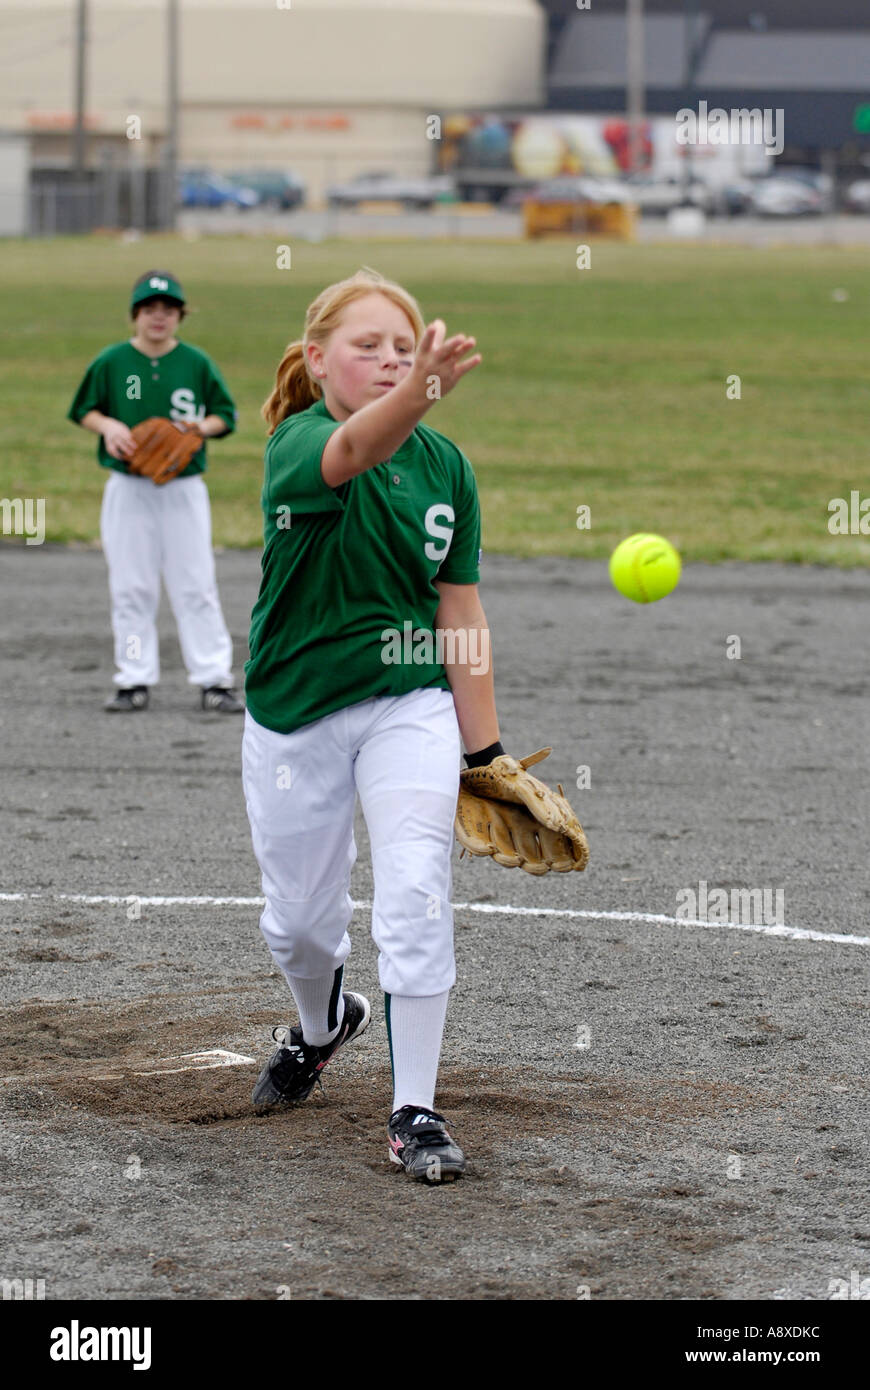 Young girls play softball Stock Photo